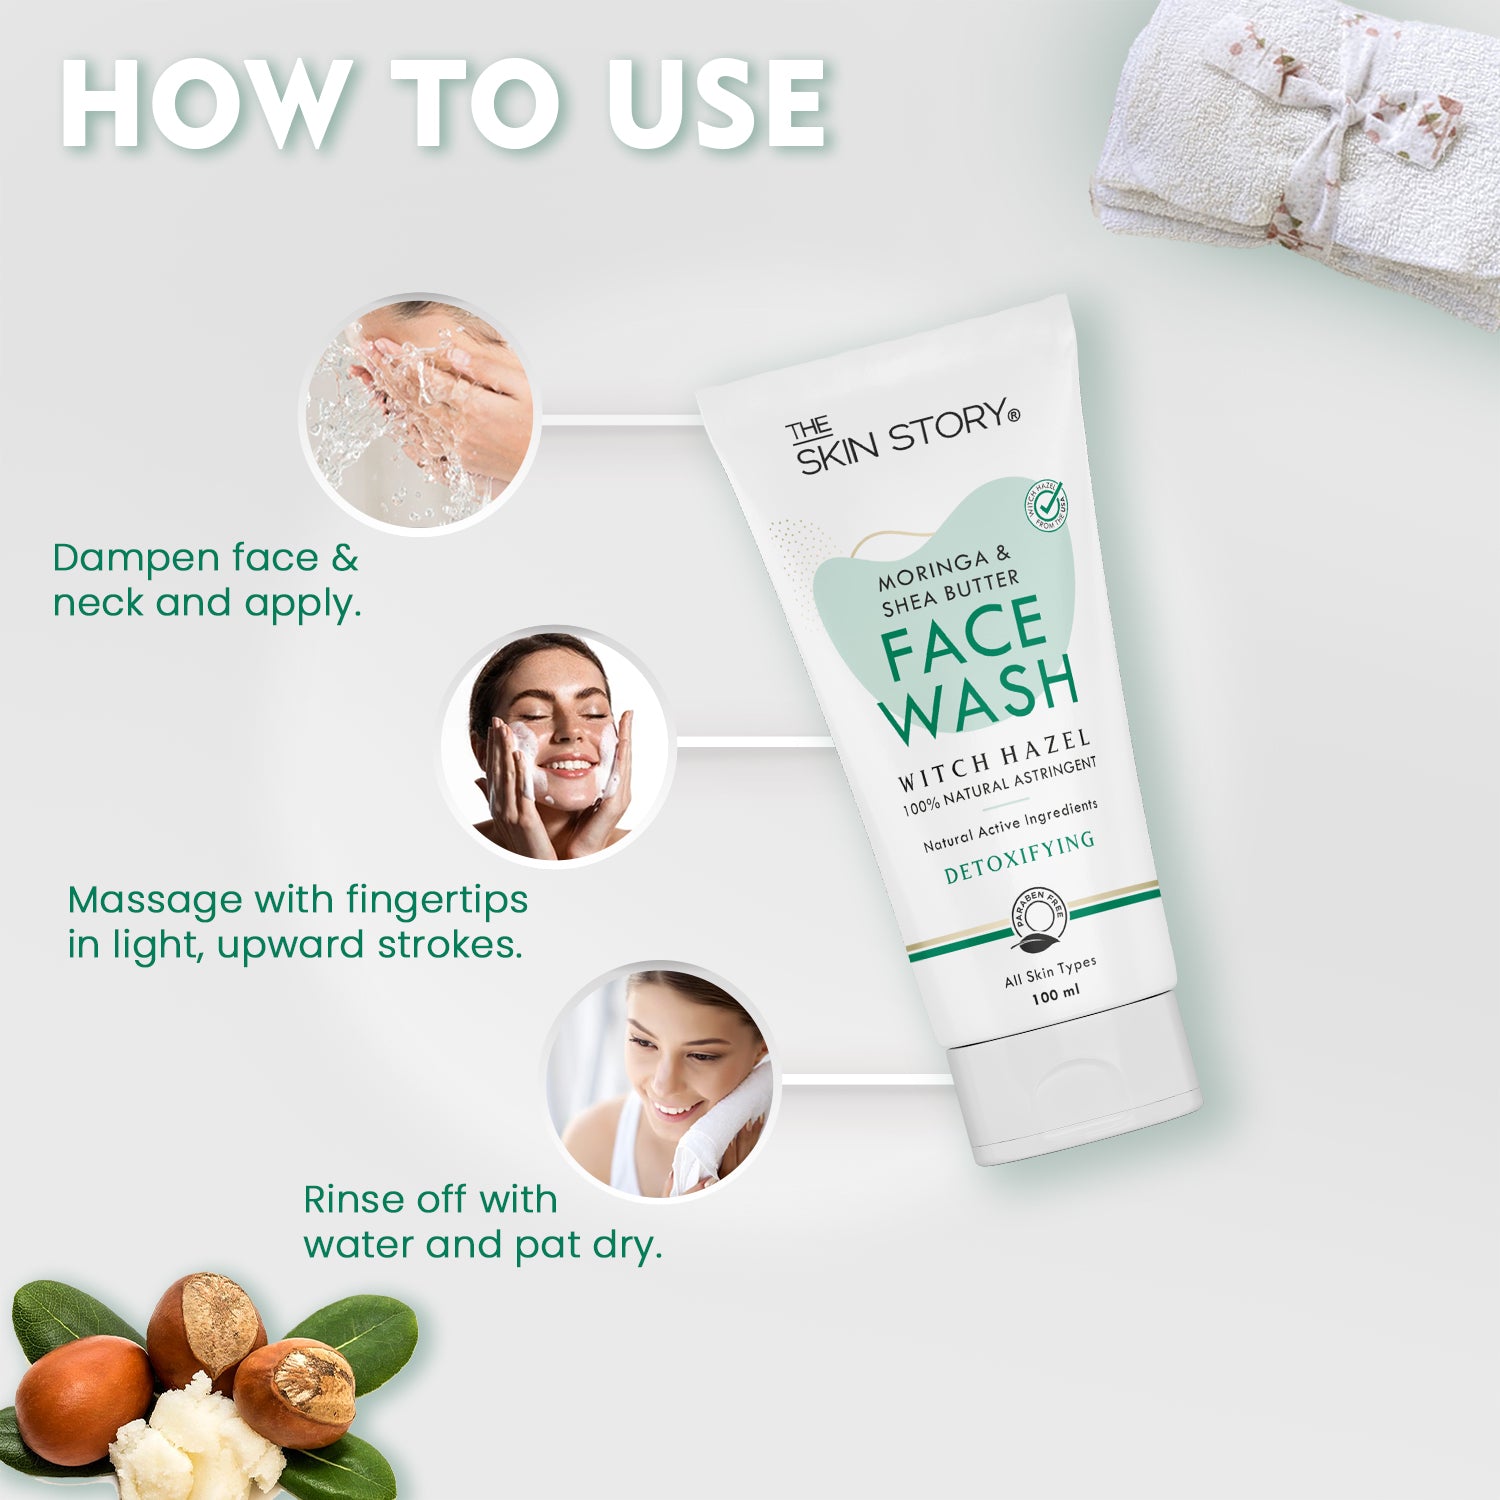 Pore Cleansing Facewash | Non-Drying &amp; Moisturising | All Skin Types | Moringa &amp; Shea Butter | 100ml